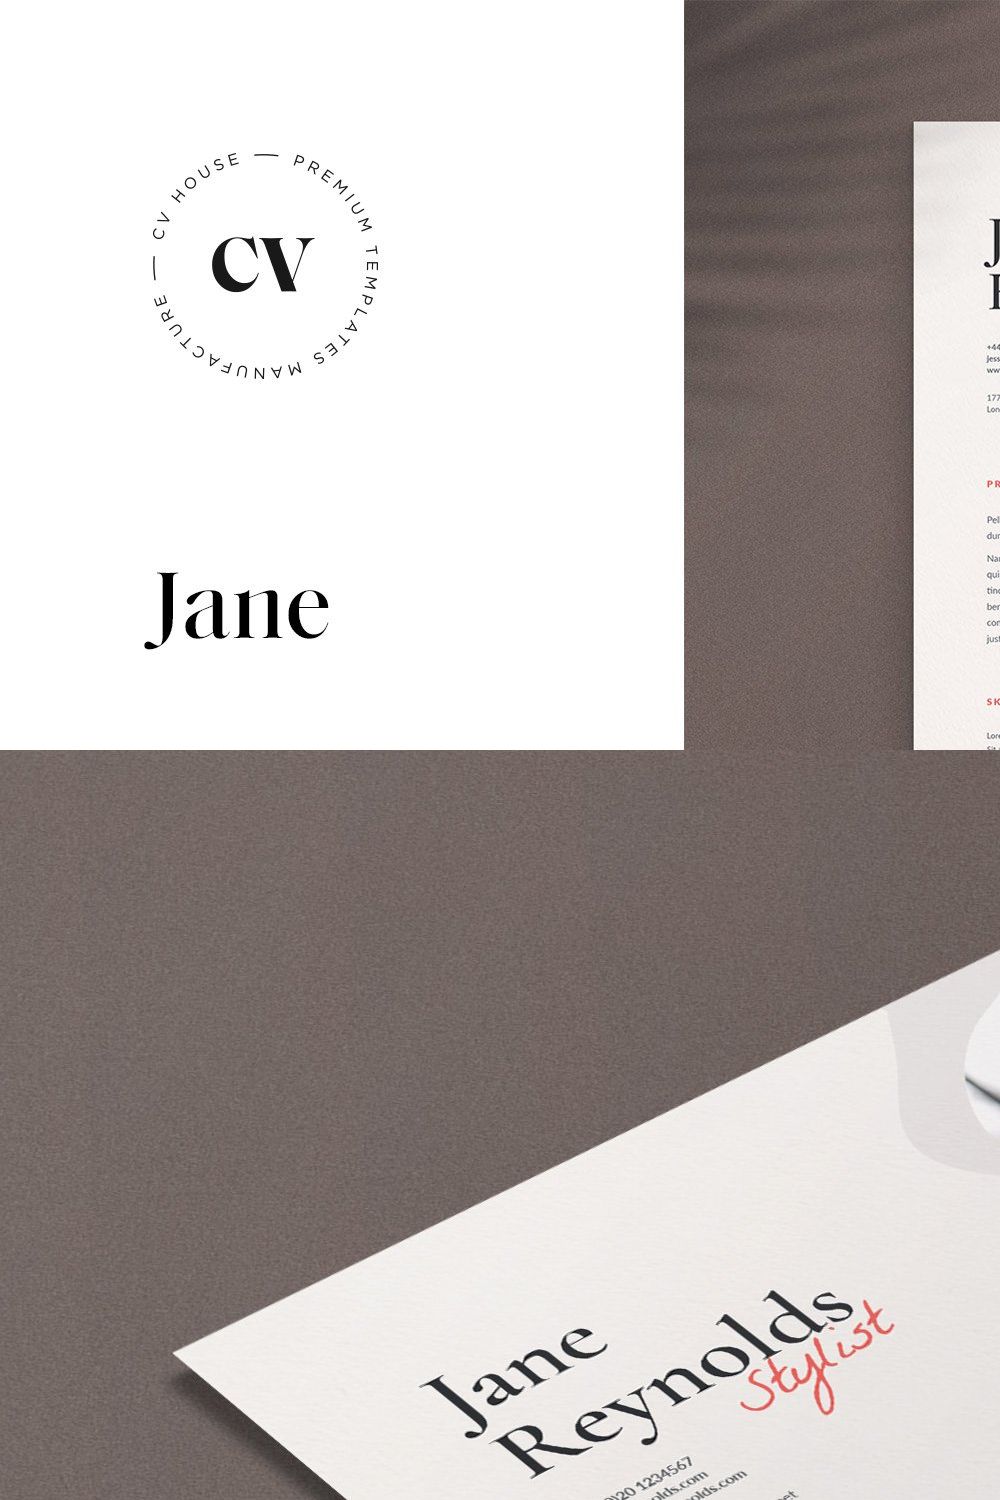 Jane | CV / resume template pinterest preview image.